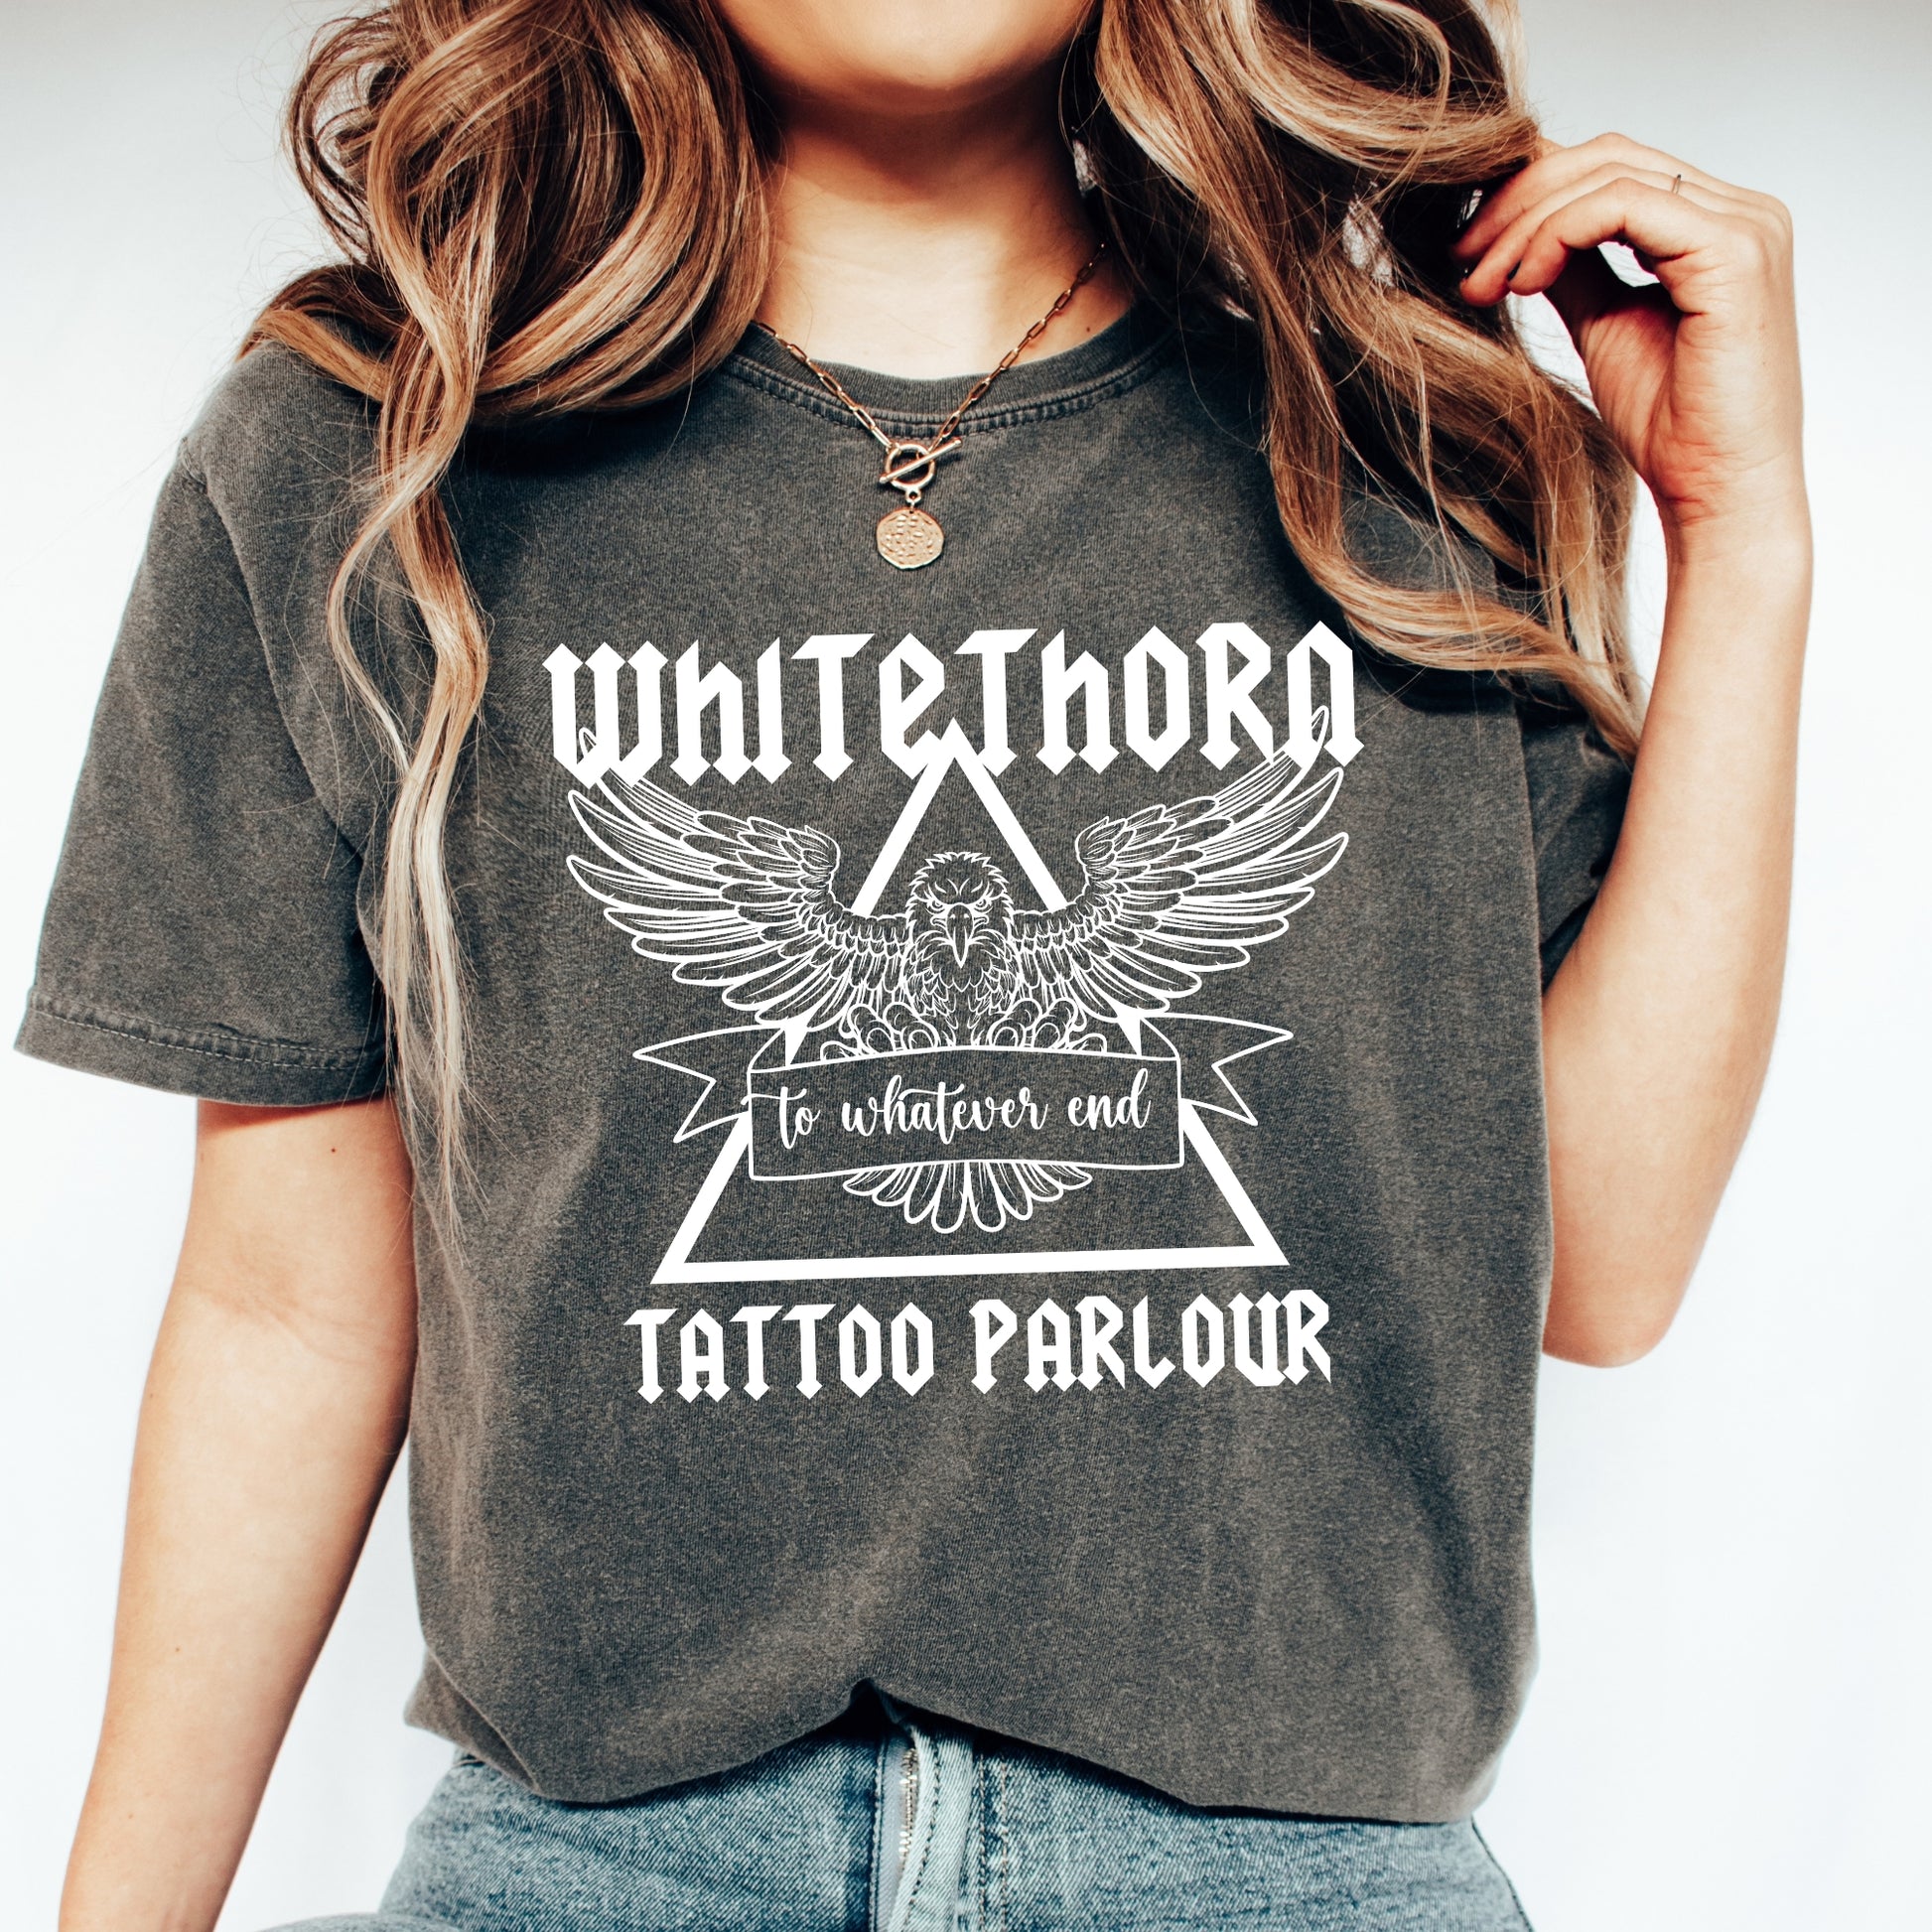 Whitethorn Tattoo Parlour Pepper Black Comfot Colors T-Shirt